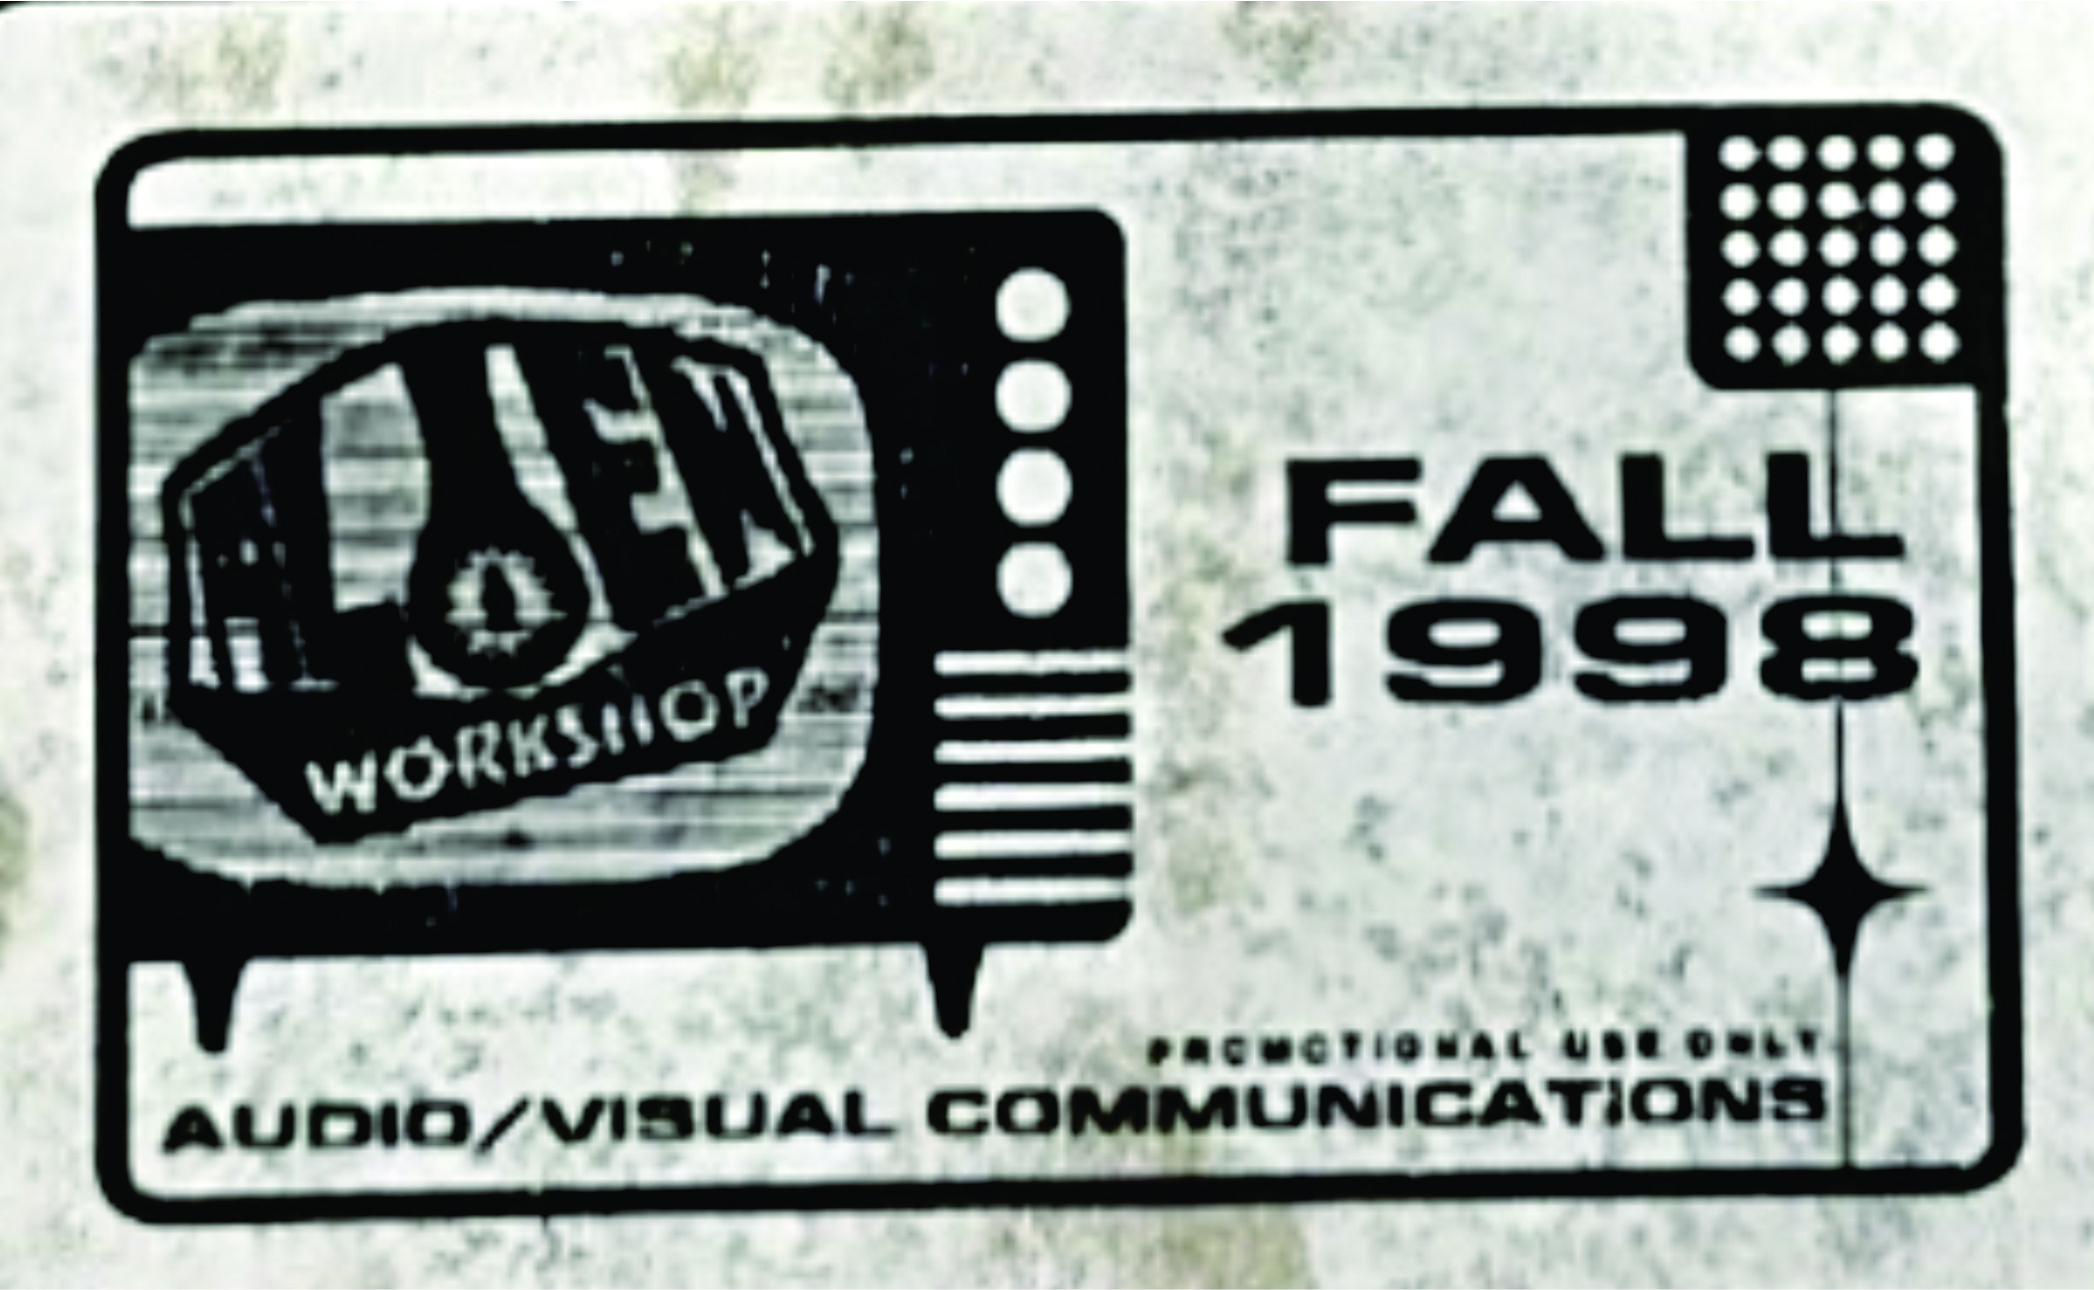 Alien Workshop - Fall 1998 cover